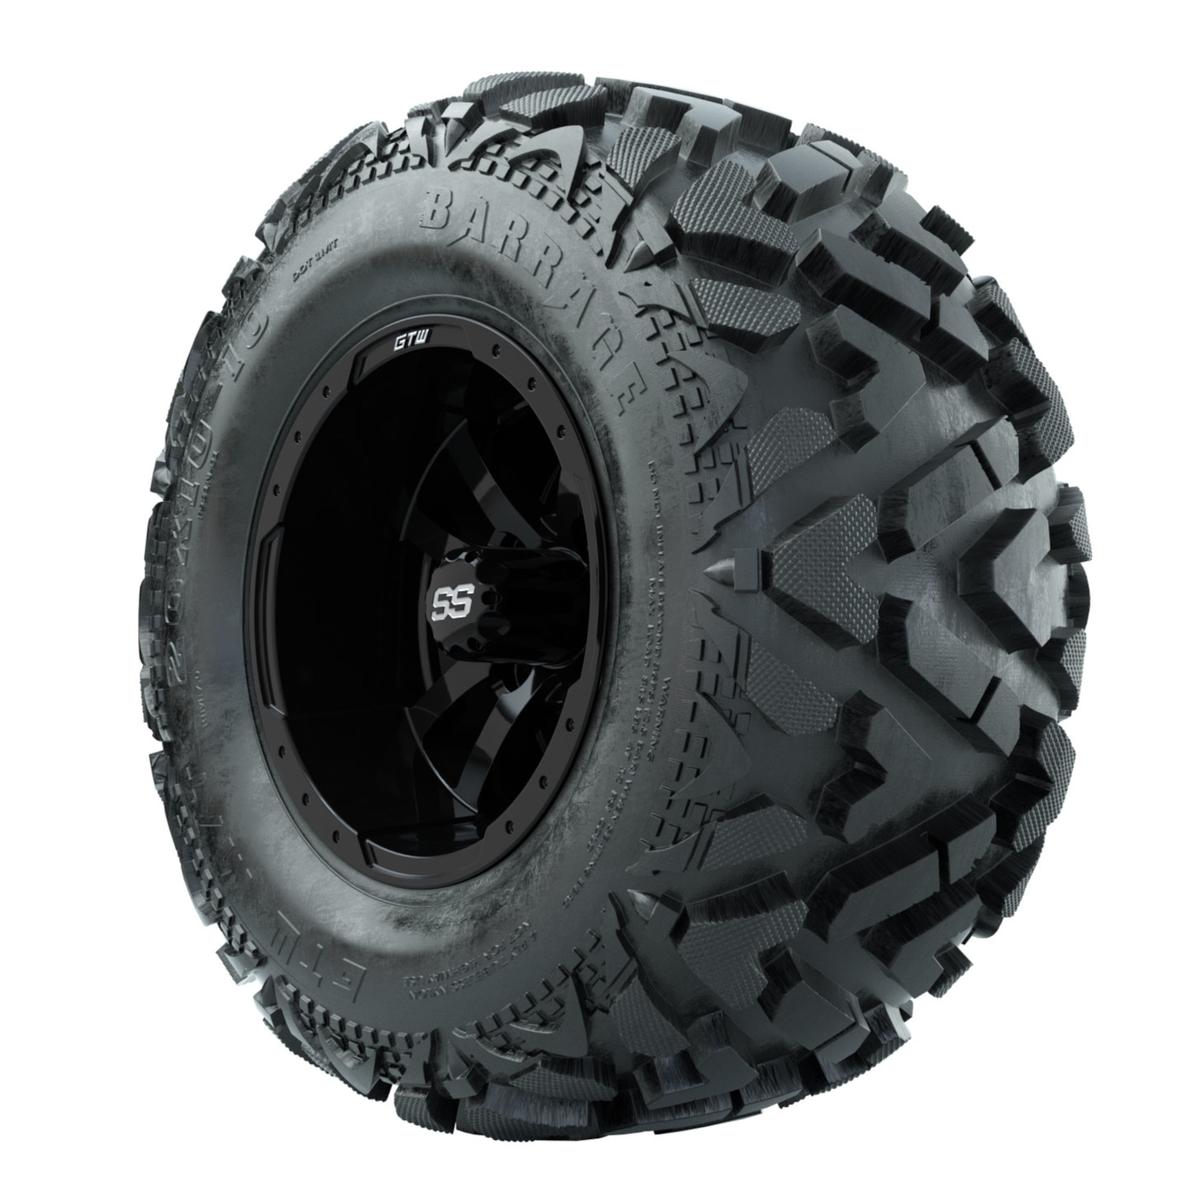 Set of (4) 10 inch Storm Trooper Wheels on Barrage Mud Tires